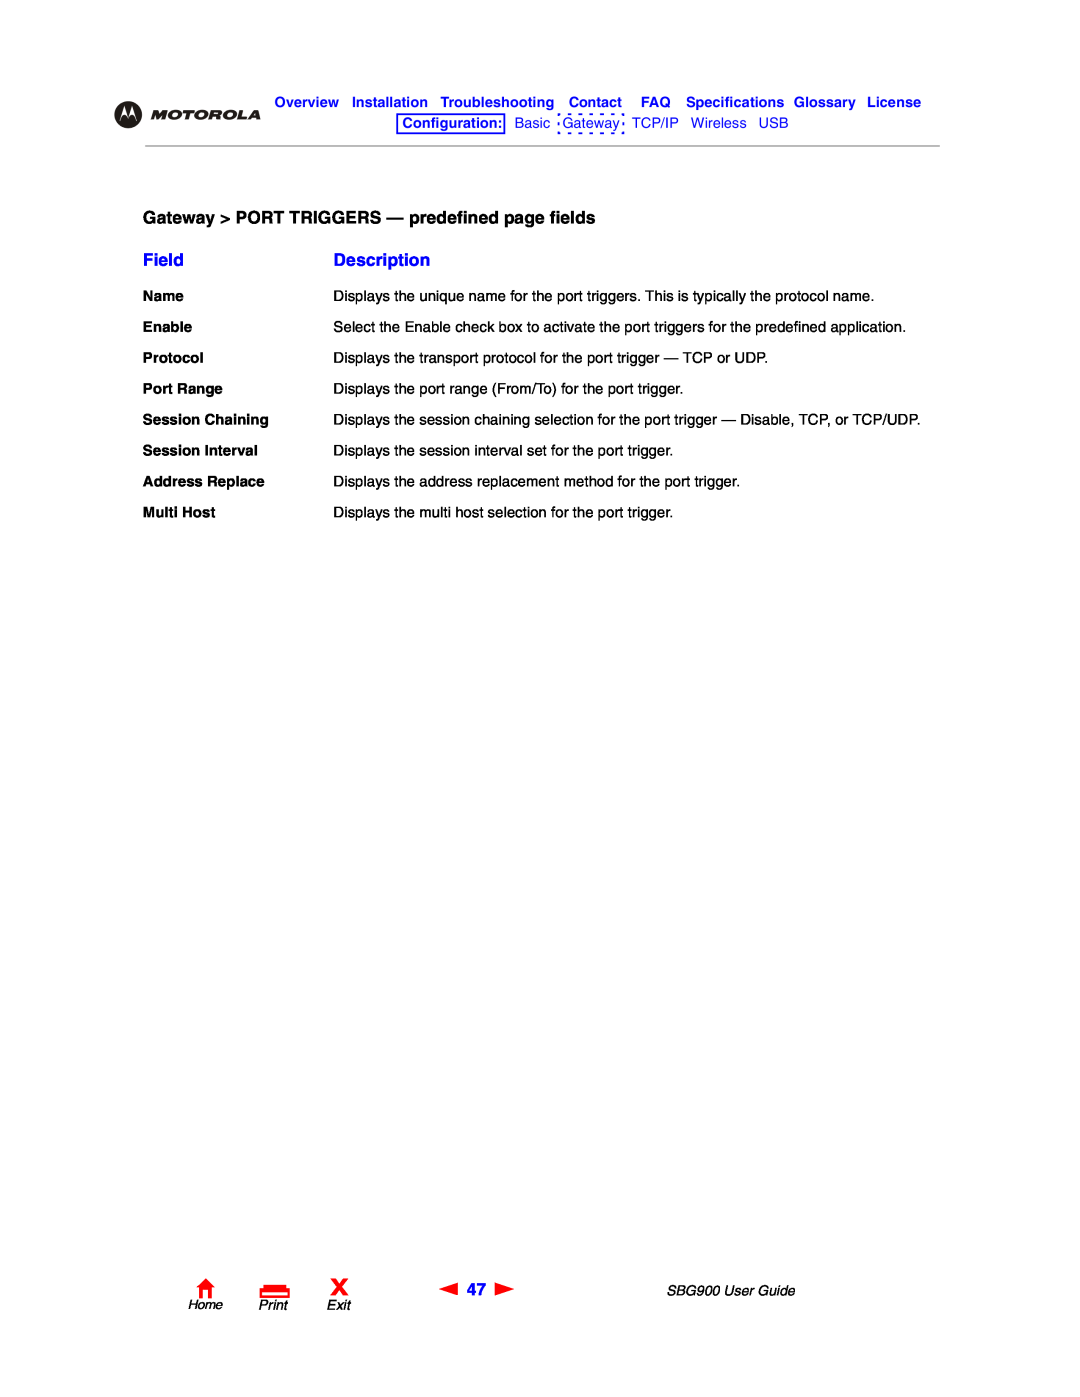 Motorola SBG900 manual Gateway PORT TRIGGERS - predefined page fields, Field, Description, Home Print Exit 